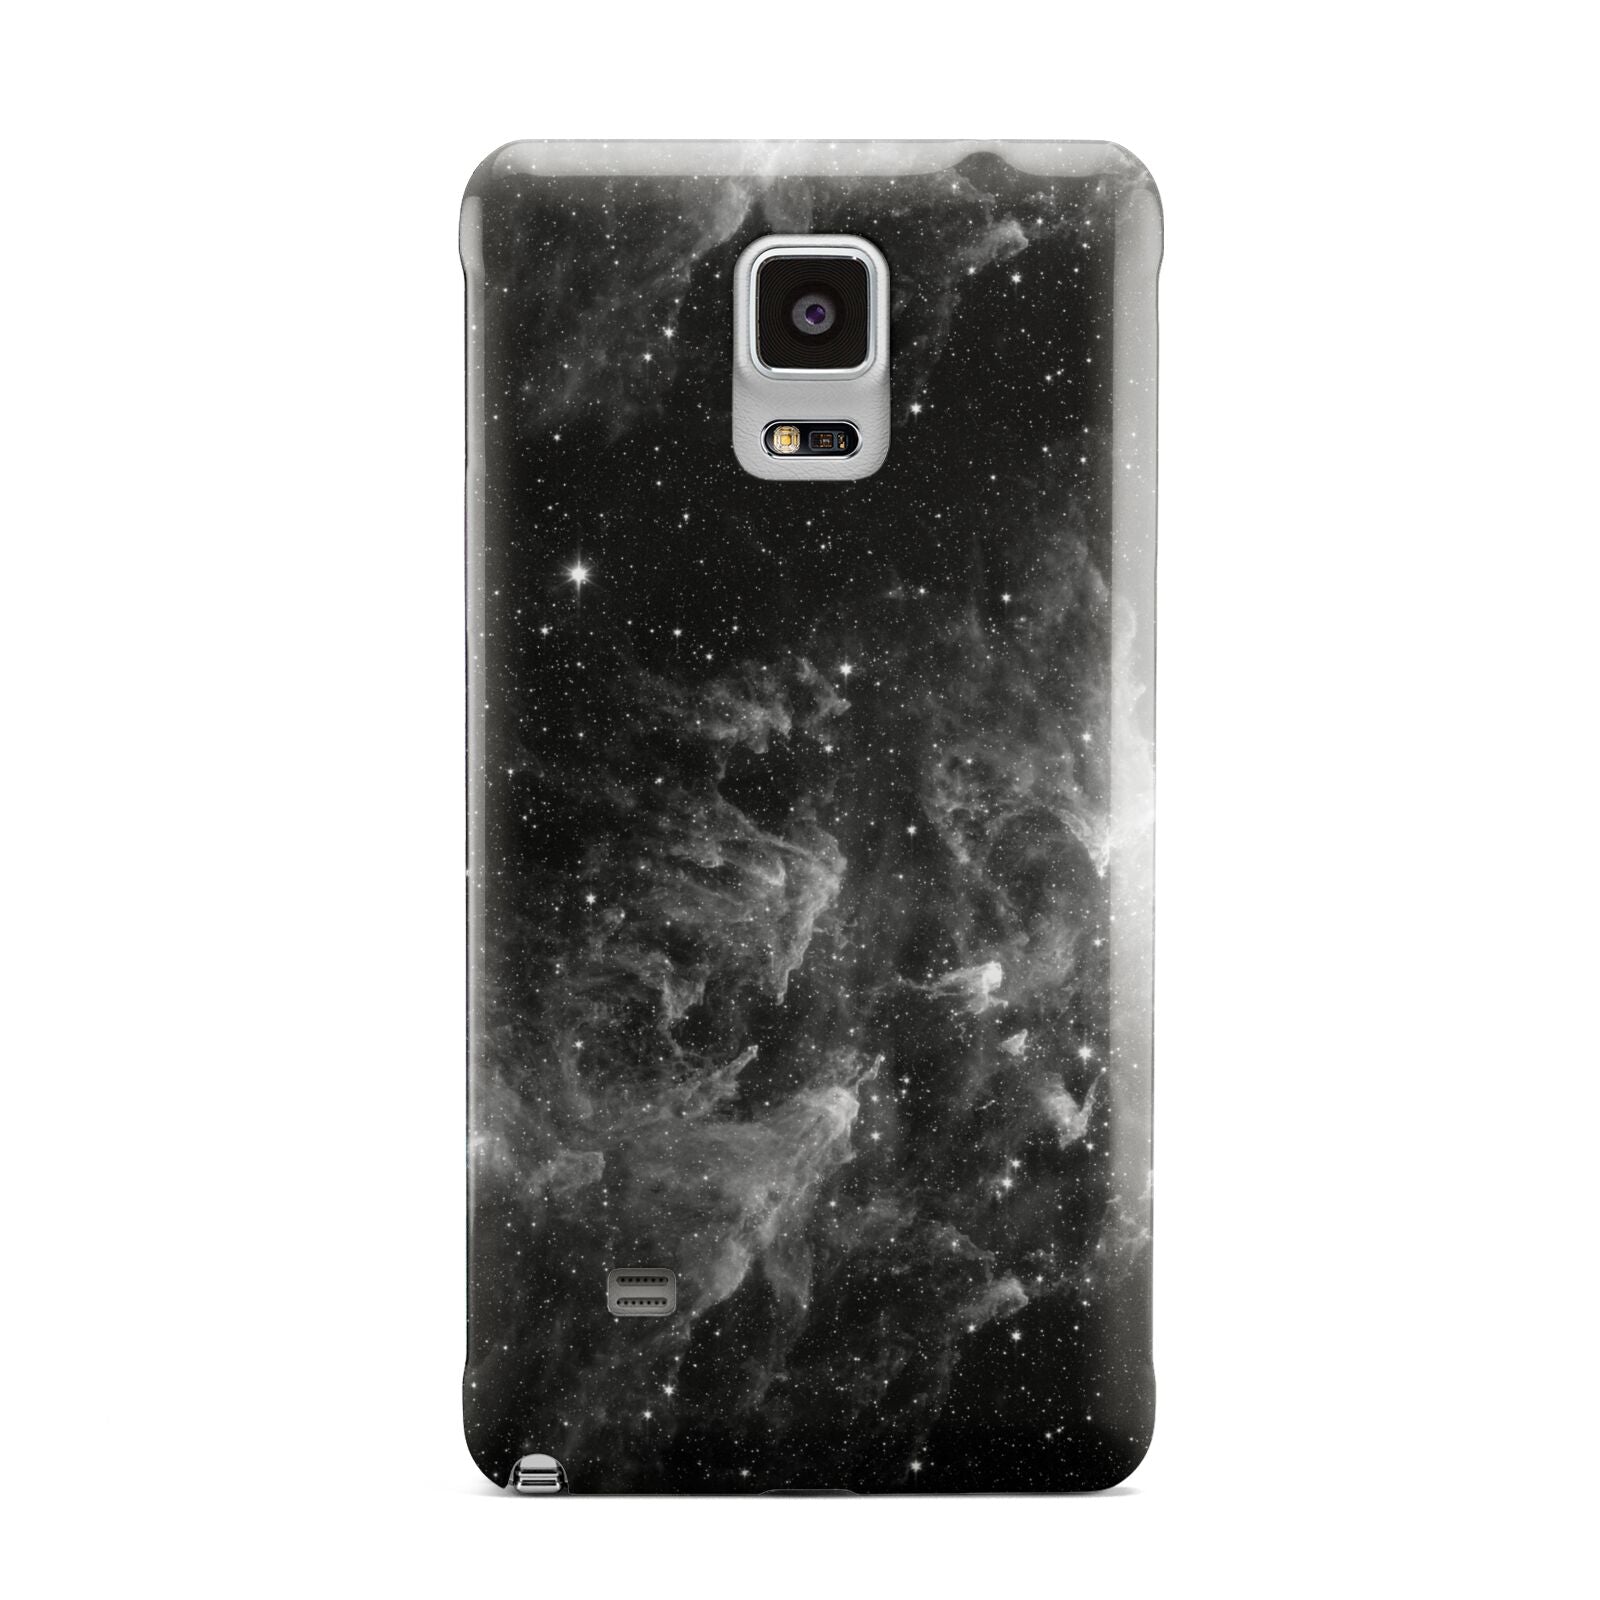 Black Space Samsung Galaxy Note 4 Case